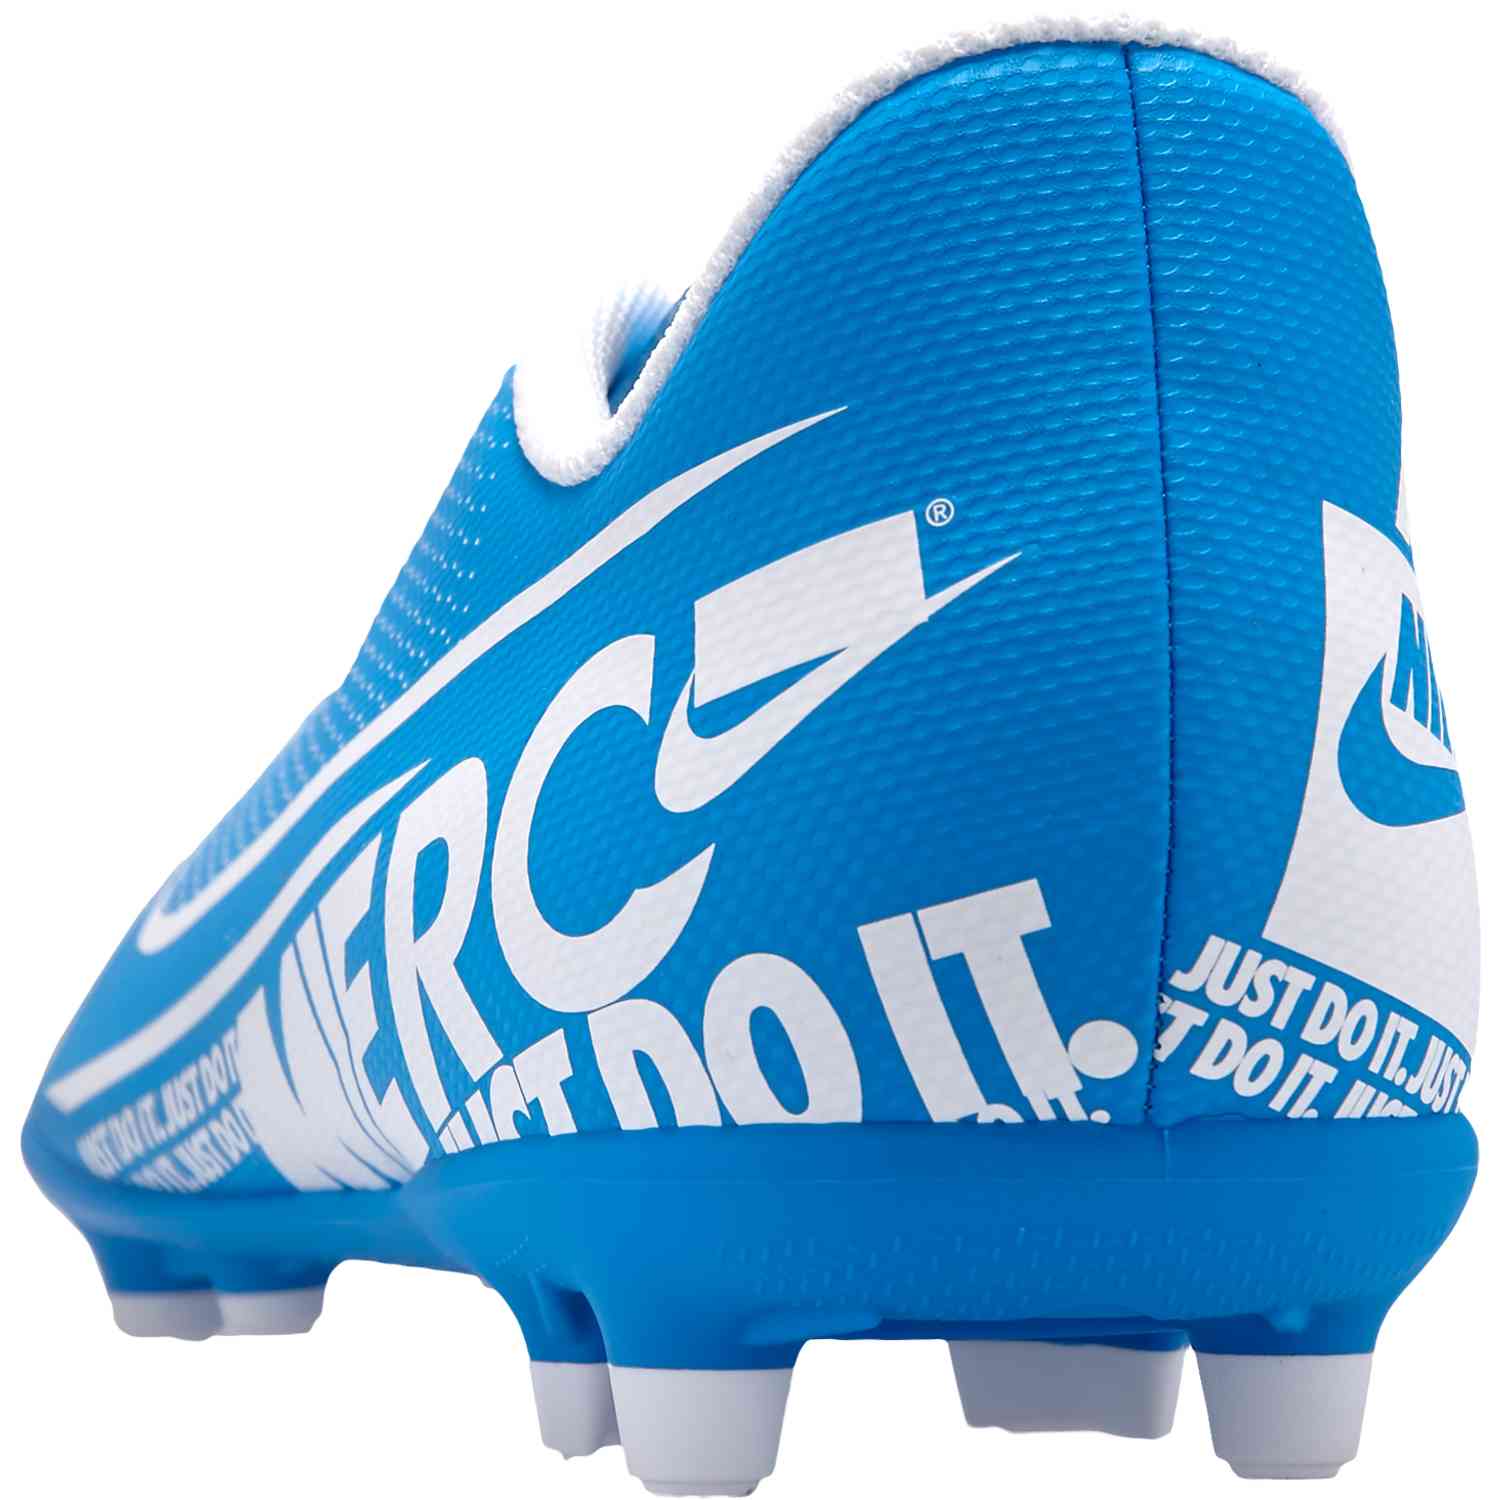 Get the Nike Mercurial Vapor 13 Elite from SoccerPro. Soccer.